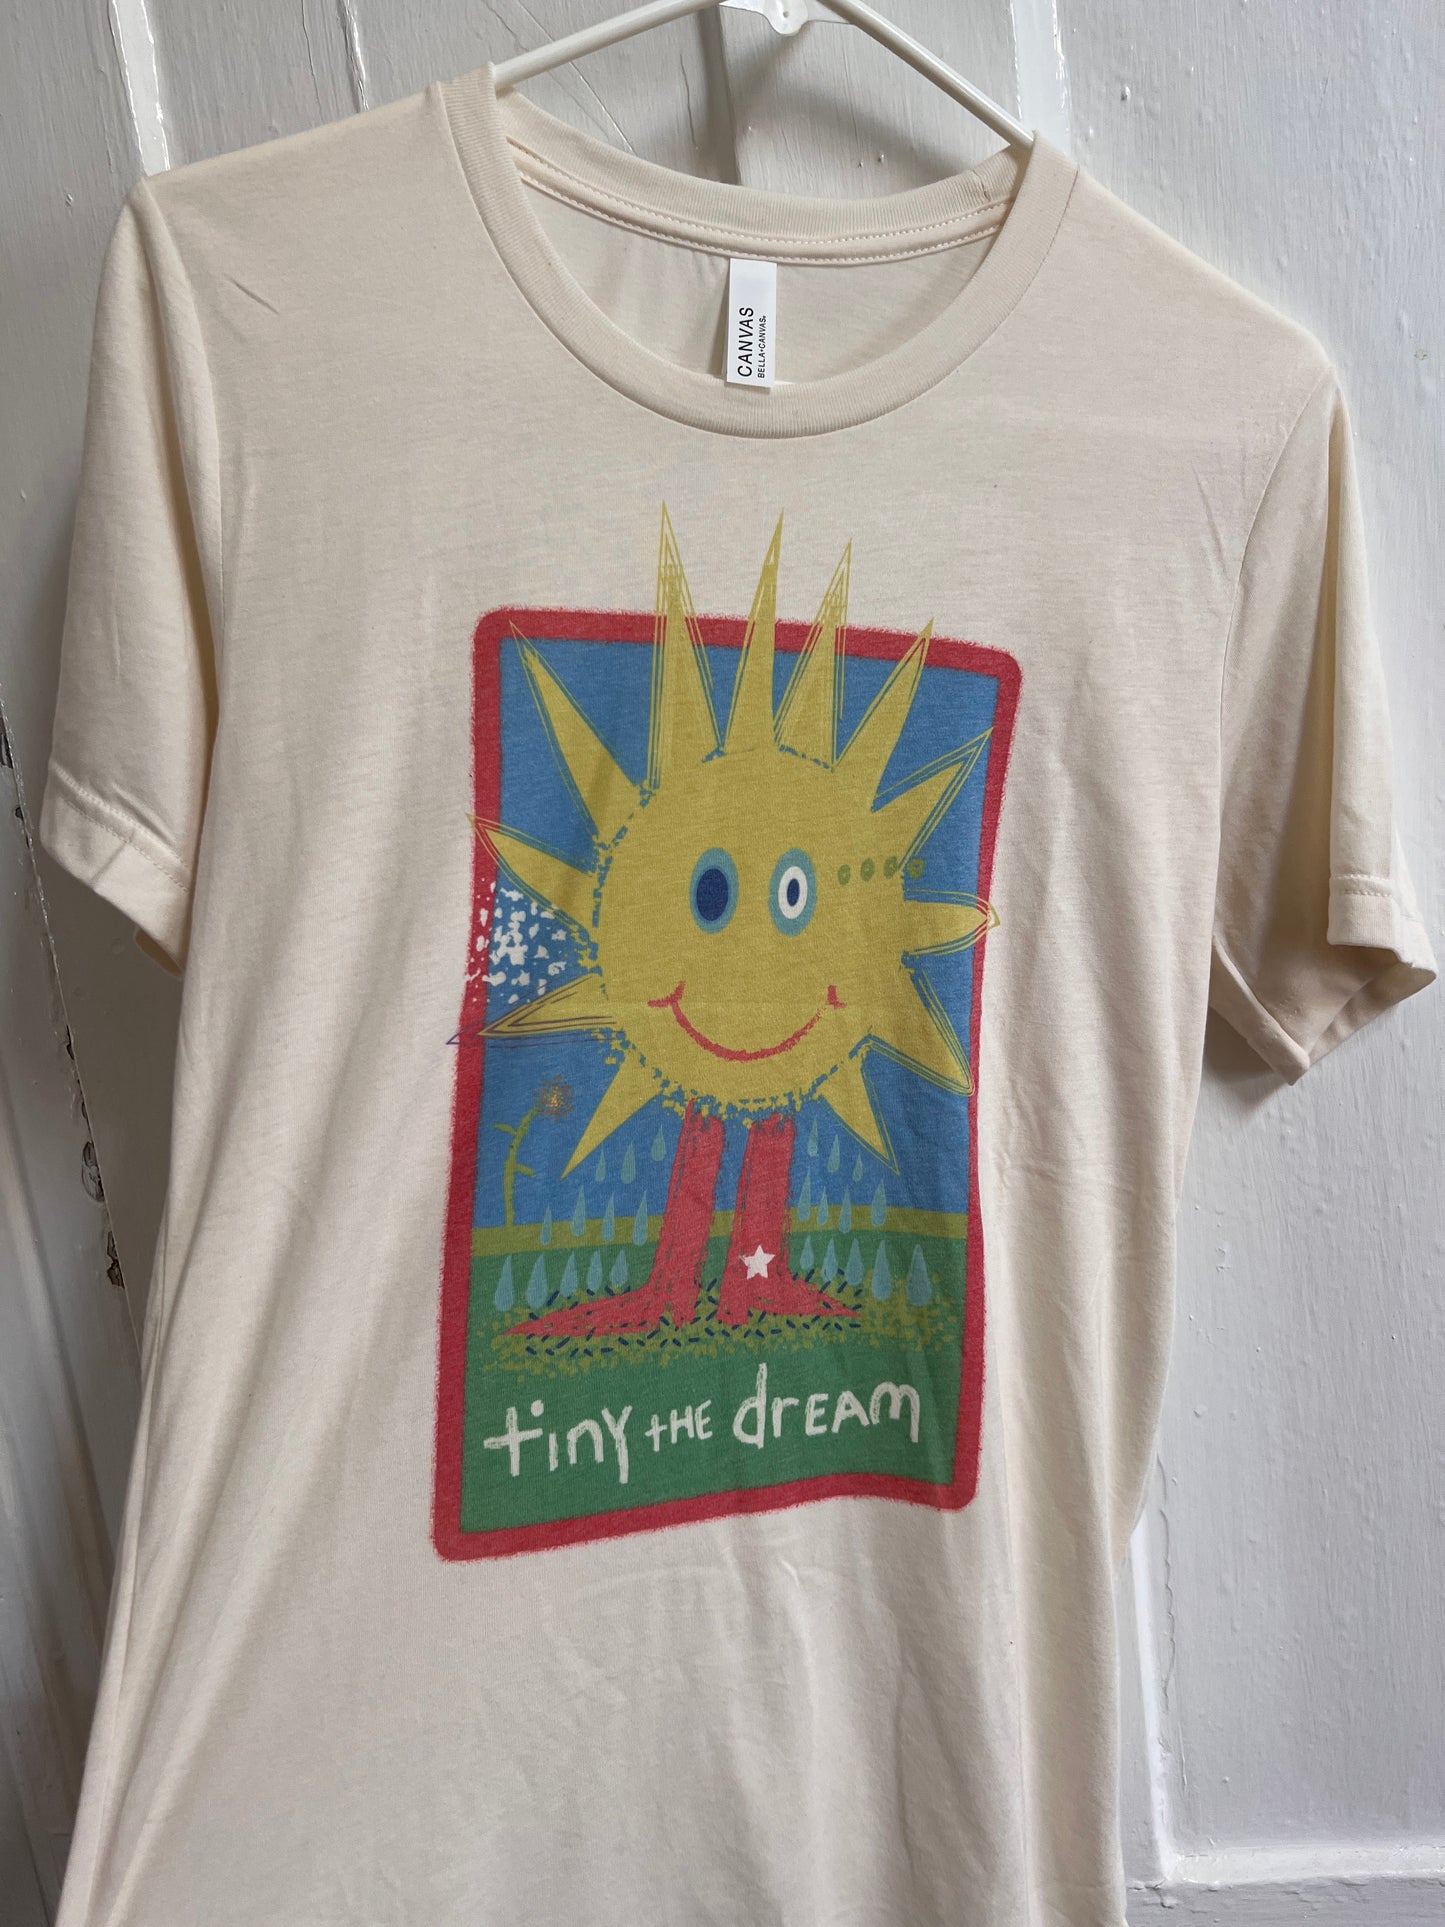 Tiny the Dream - Sunshine Shirt